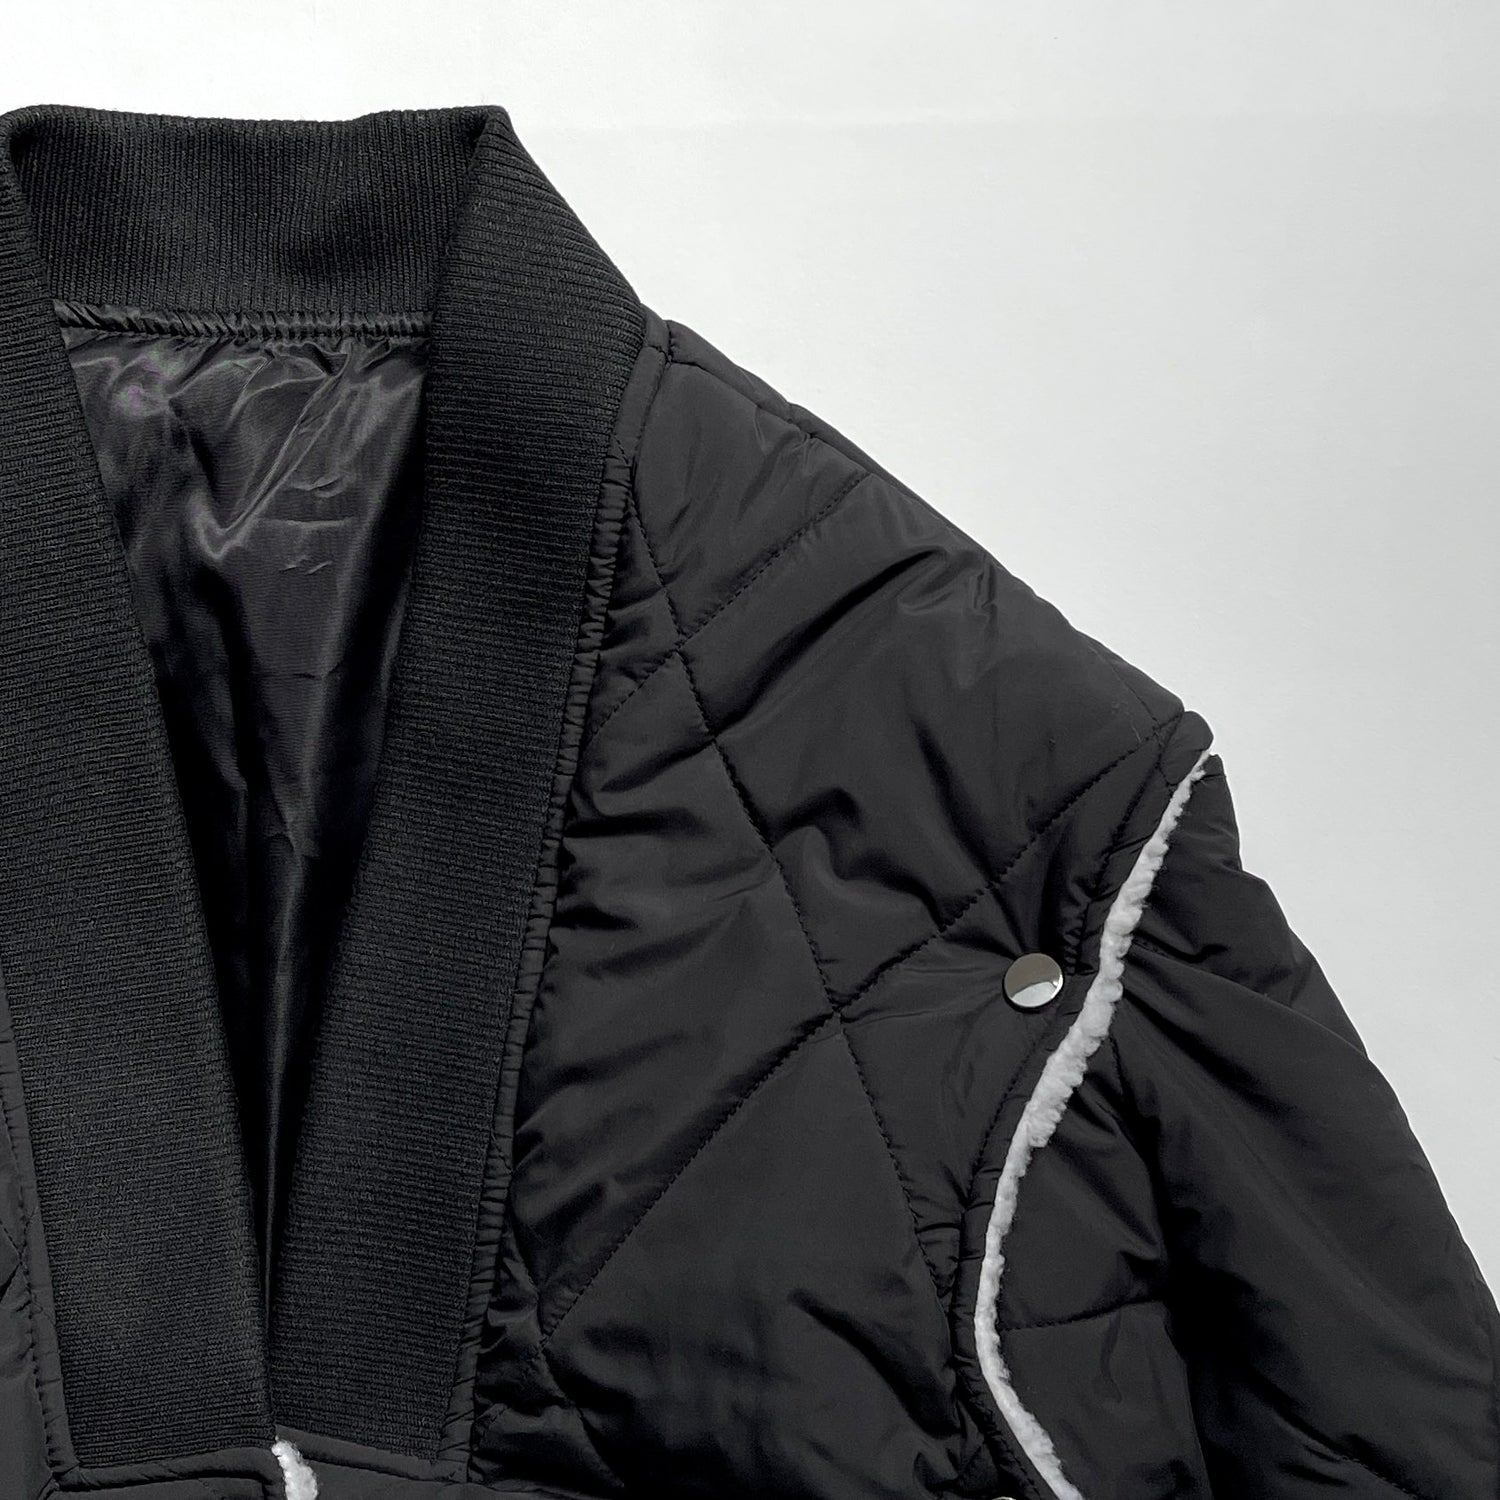 【SAMPLE】2way short quilting coat  /  black